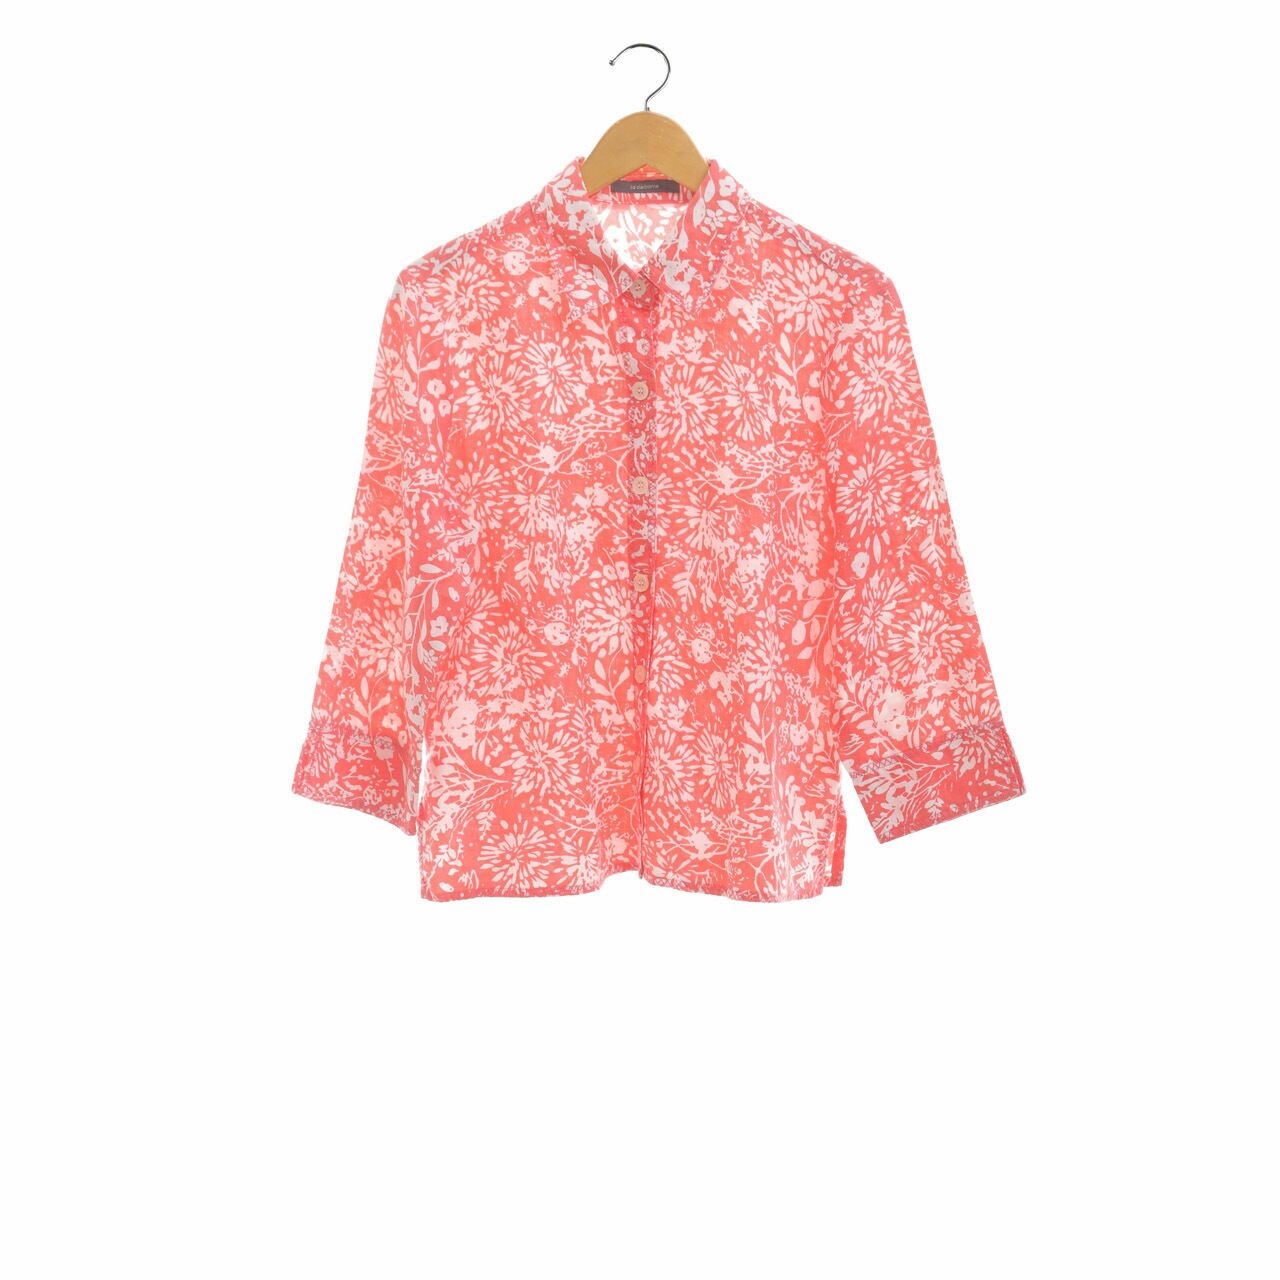 Liz Claiborne Pink Coral Printed Shirt